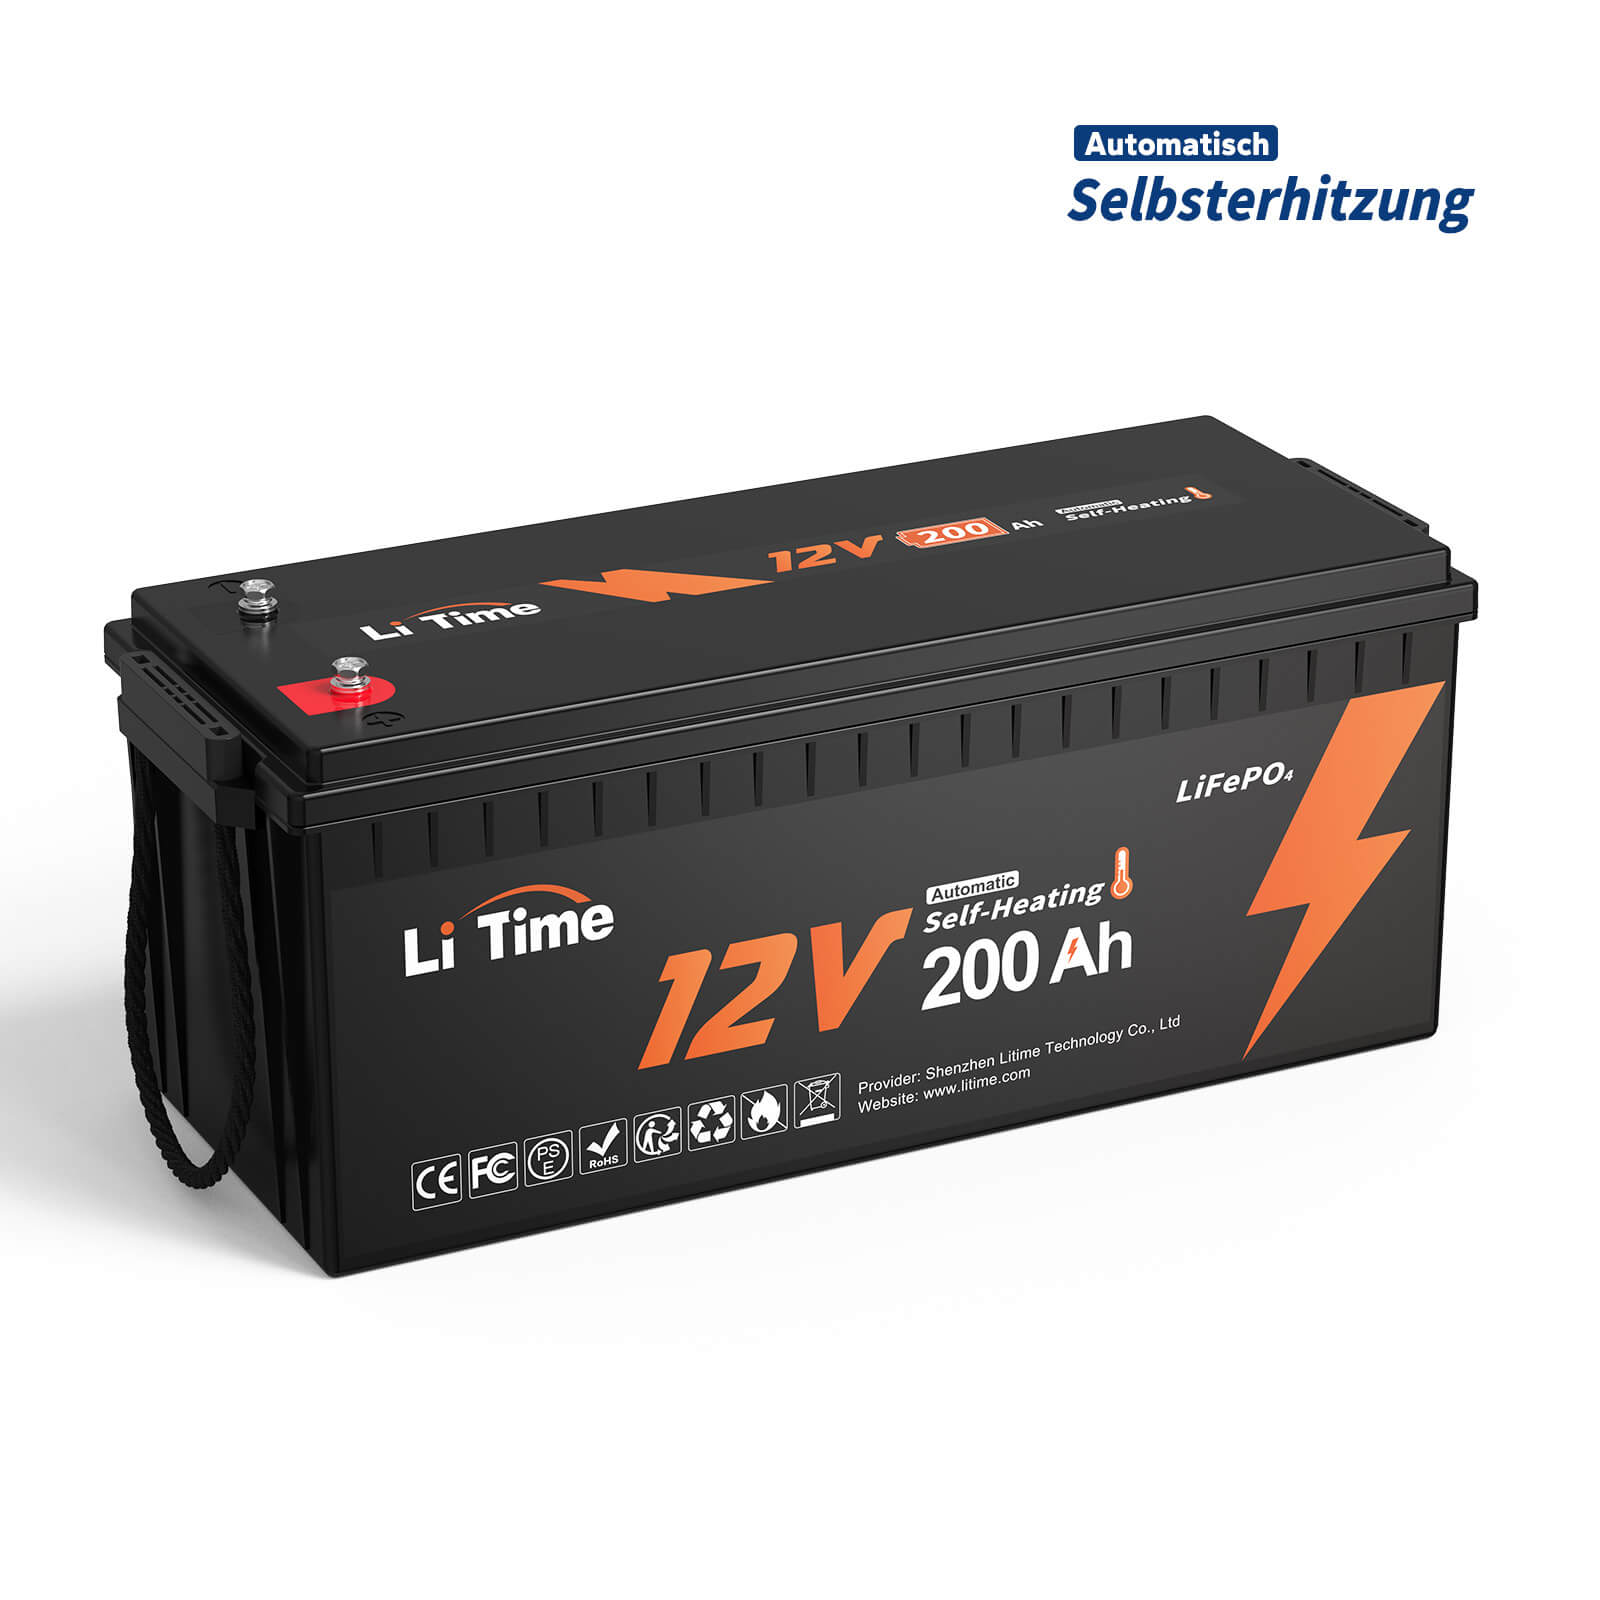 0% MwSt.】LiTime 12V 200Ah Selbsterwärmende LiFePO4 Lithium Batterie m –  LiTime-DE